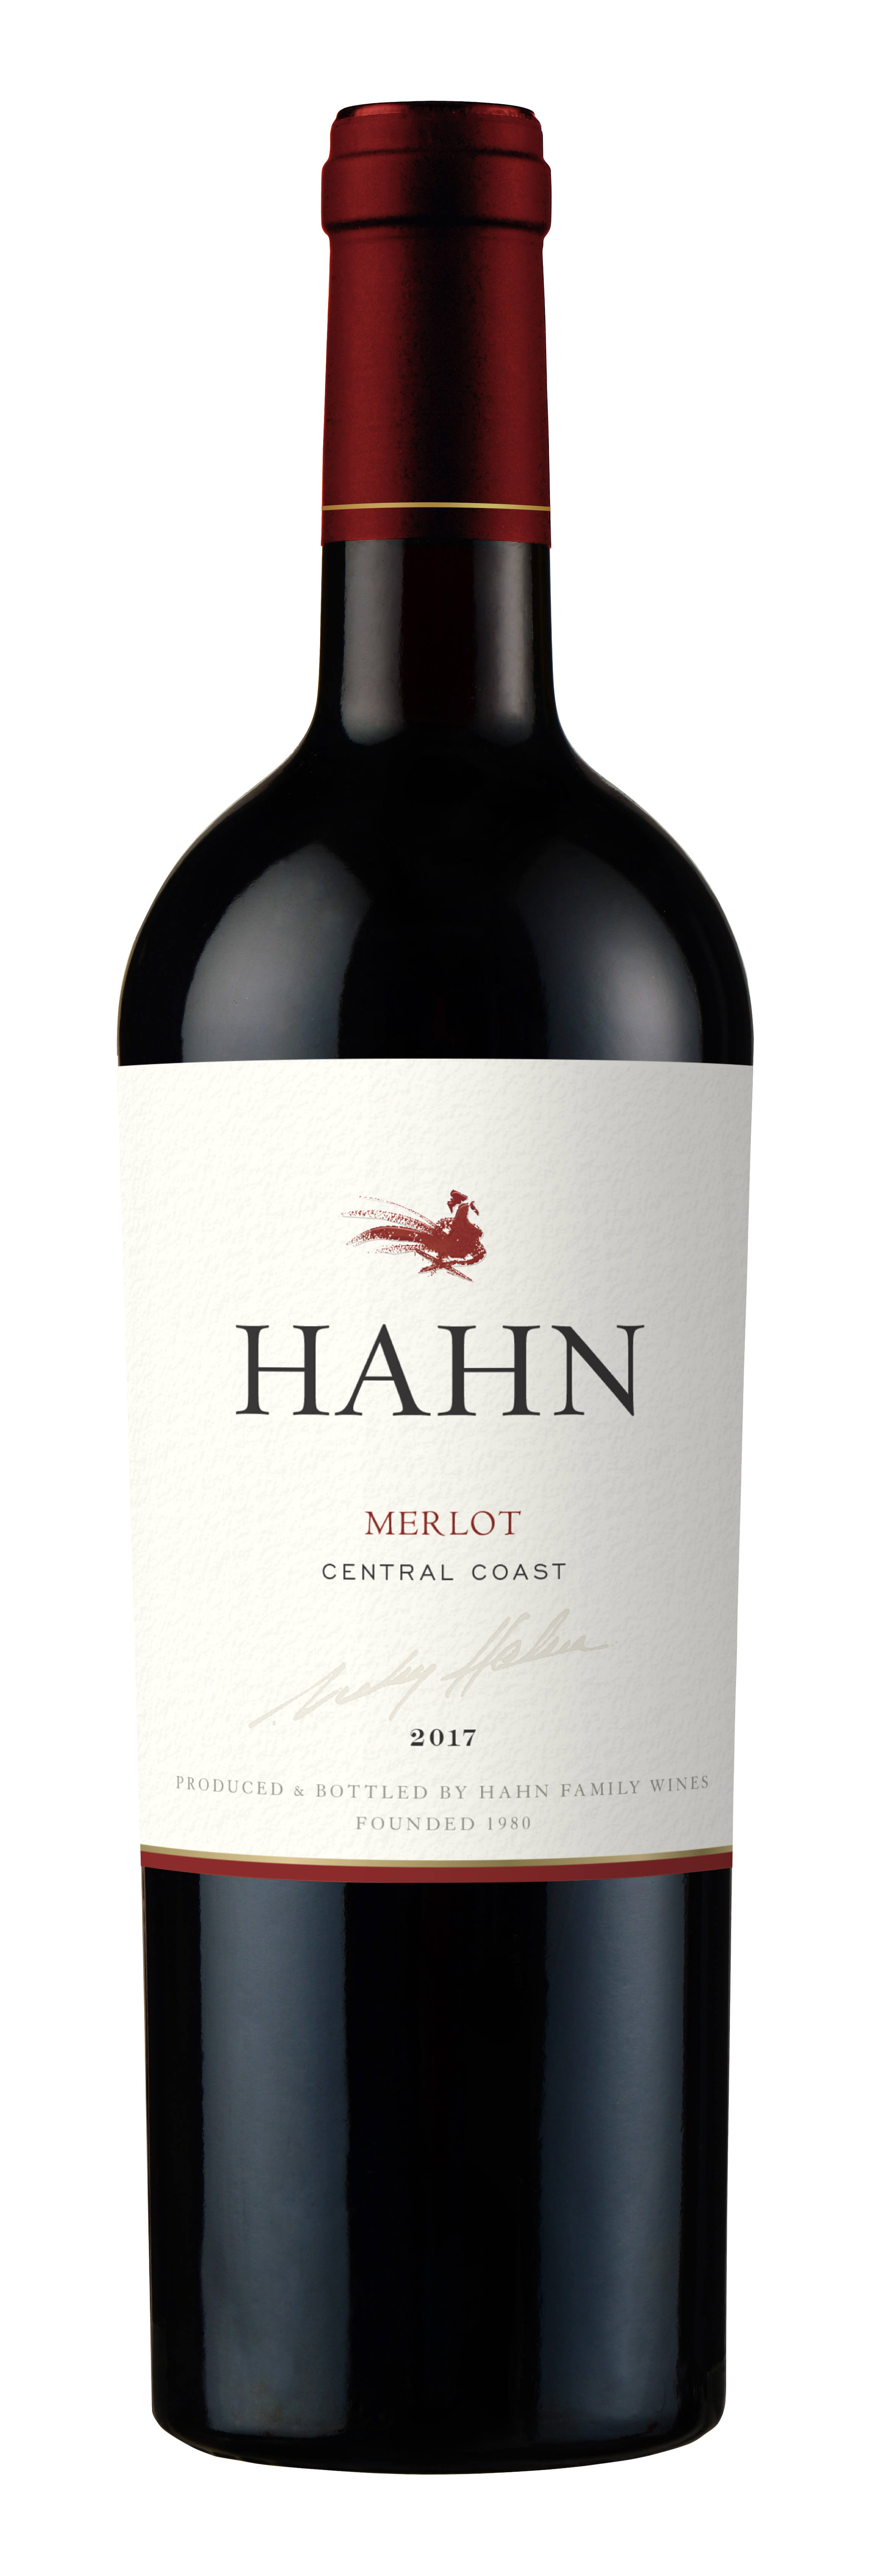 Hahn Merlot, Central Coast (Vintage Varies) - 750 ml bottle